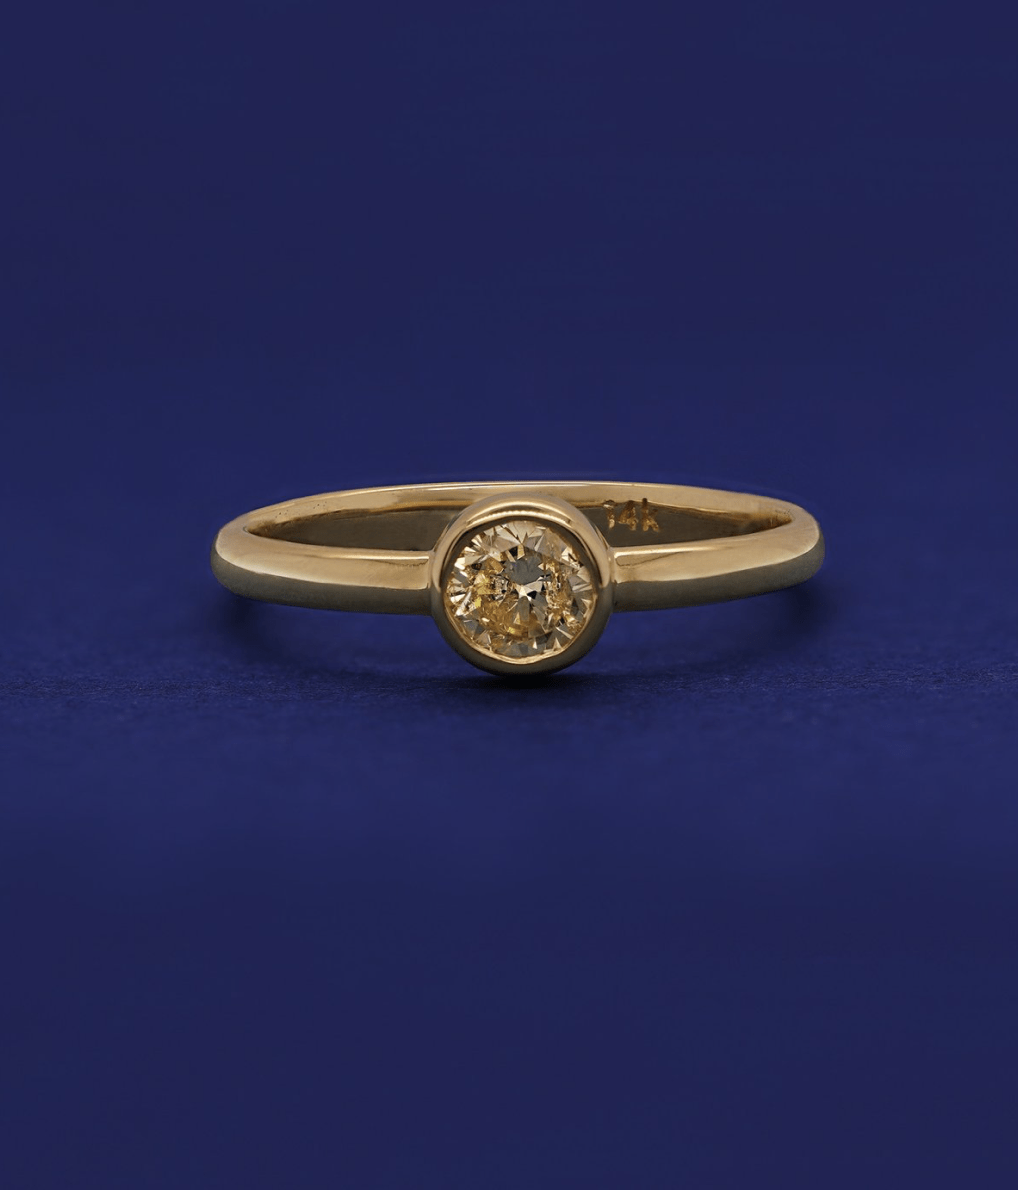 A 14k yellow gold bezel set 1/3ct Diamond Ring on a blue background